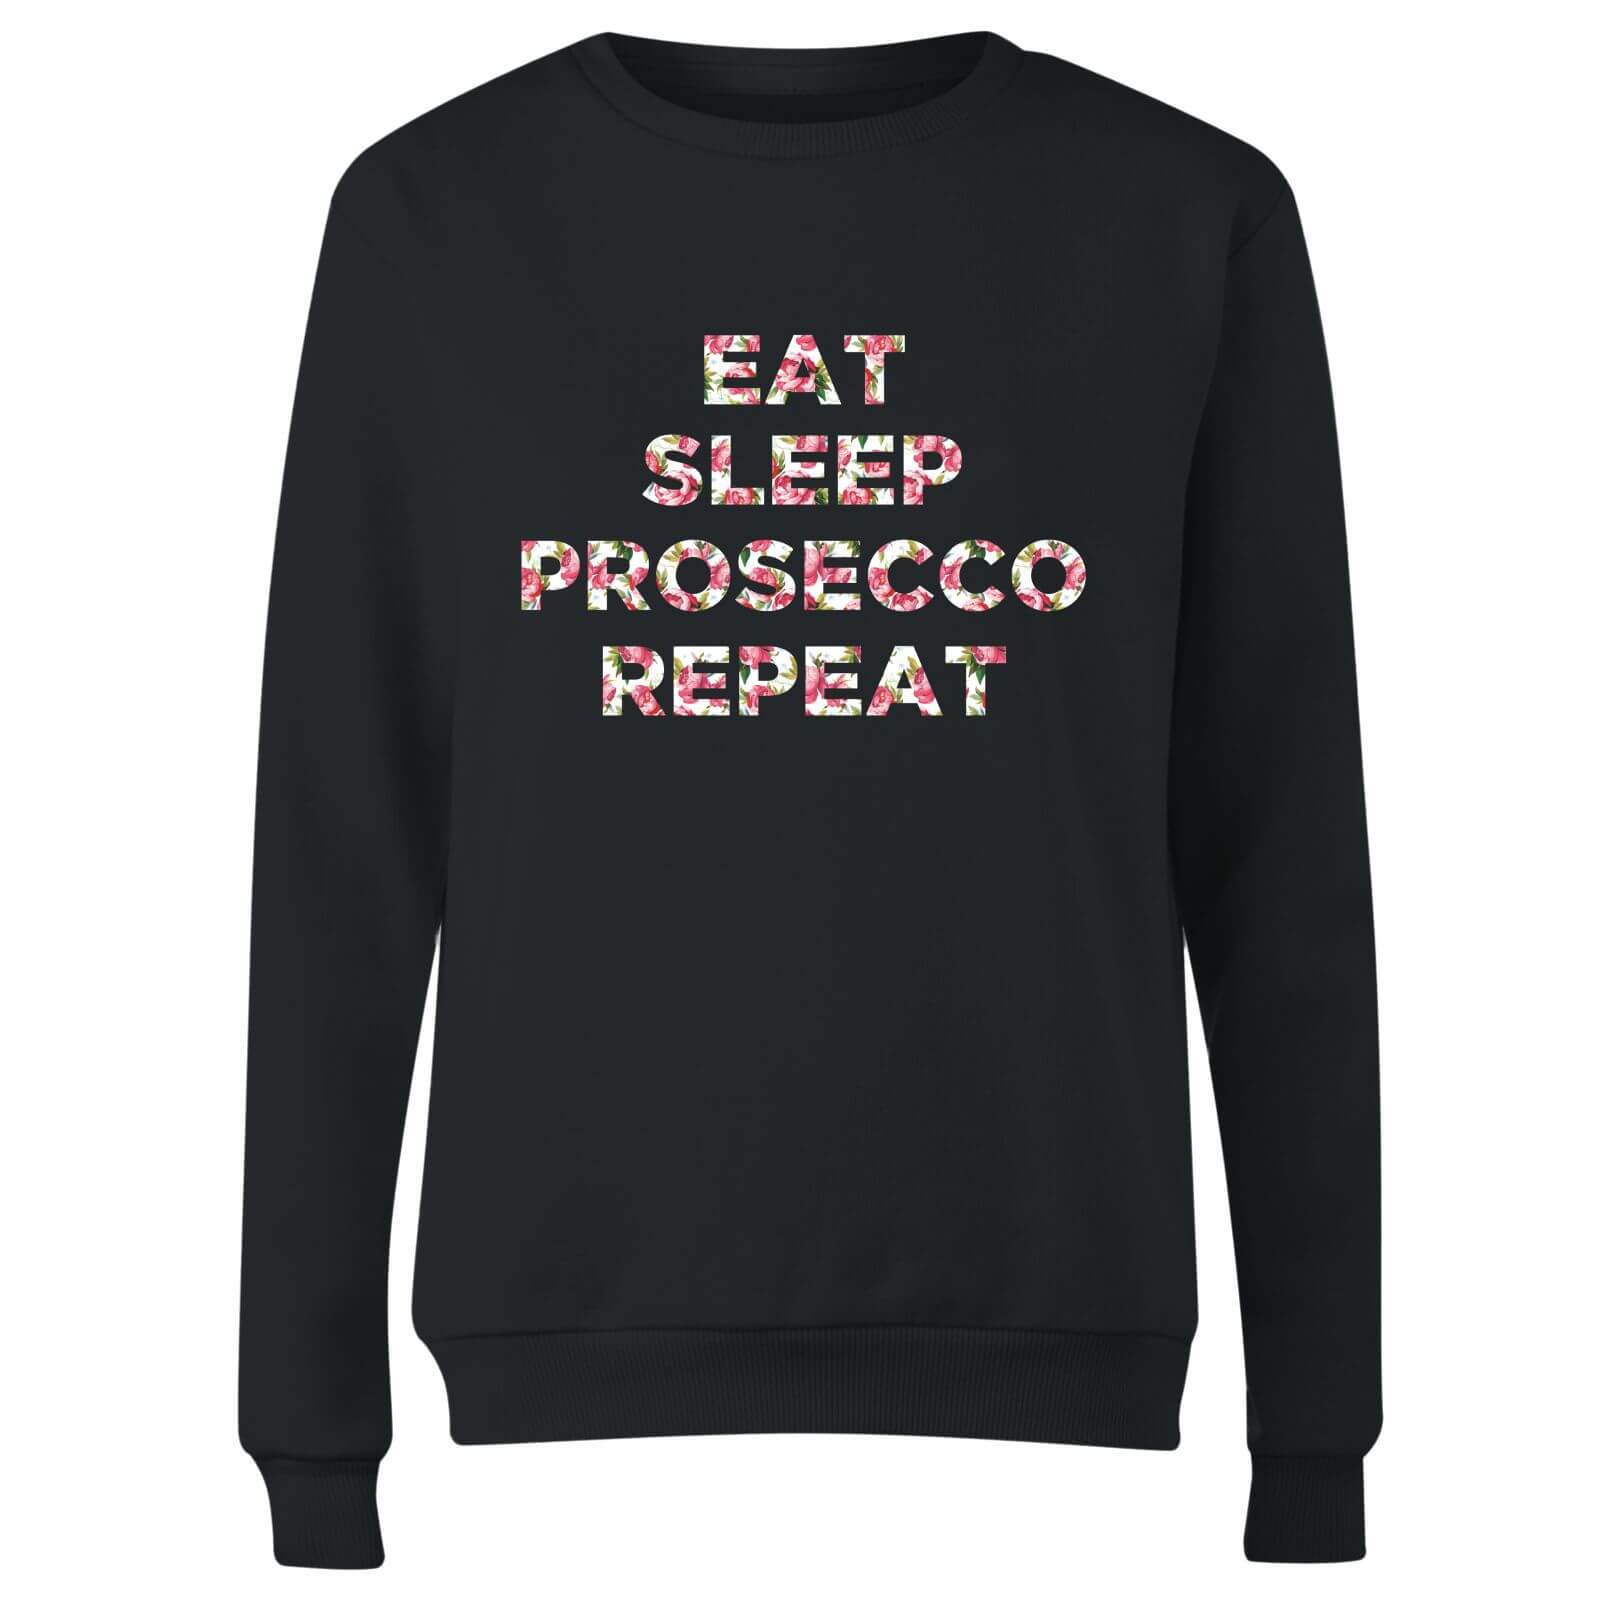 Eat Sleep Prosecco Repeat Women's Sweatshirt - Black - S - Black